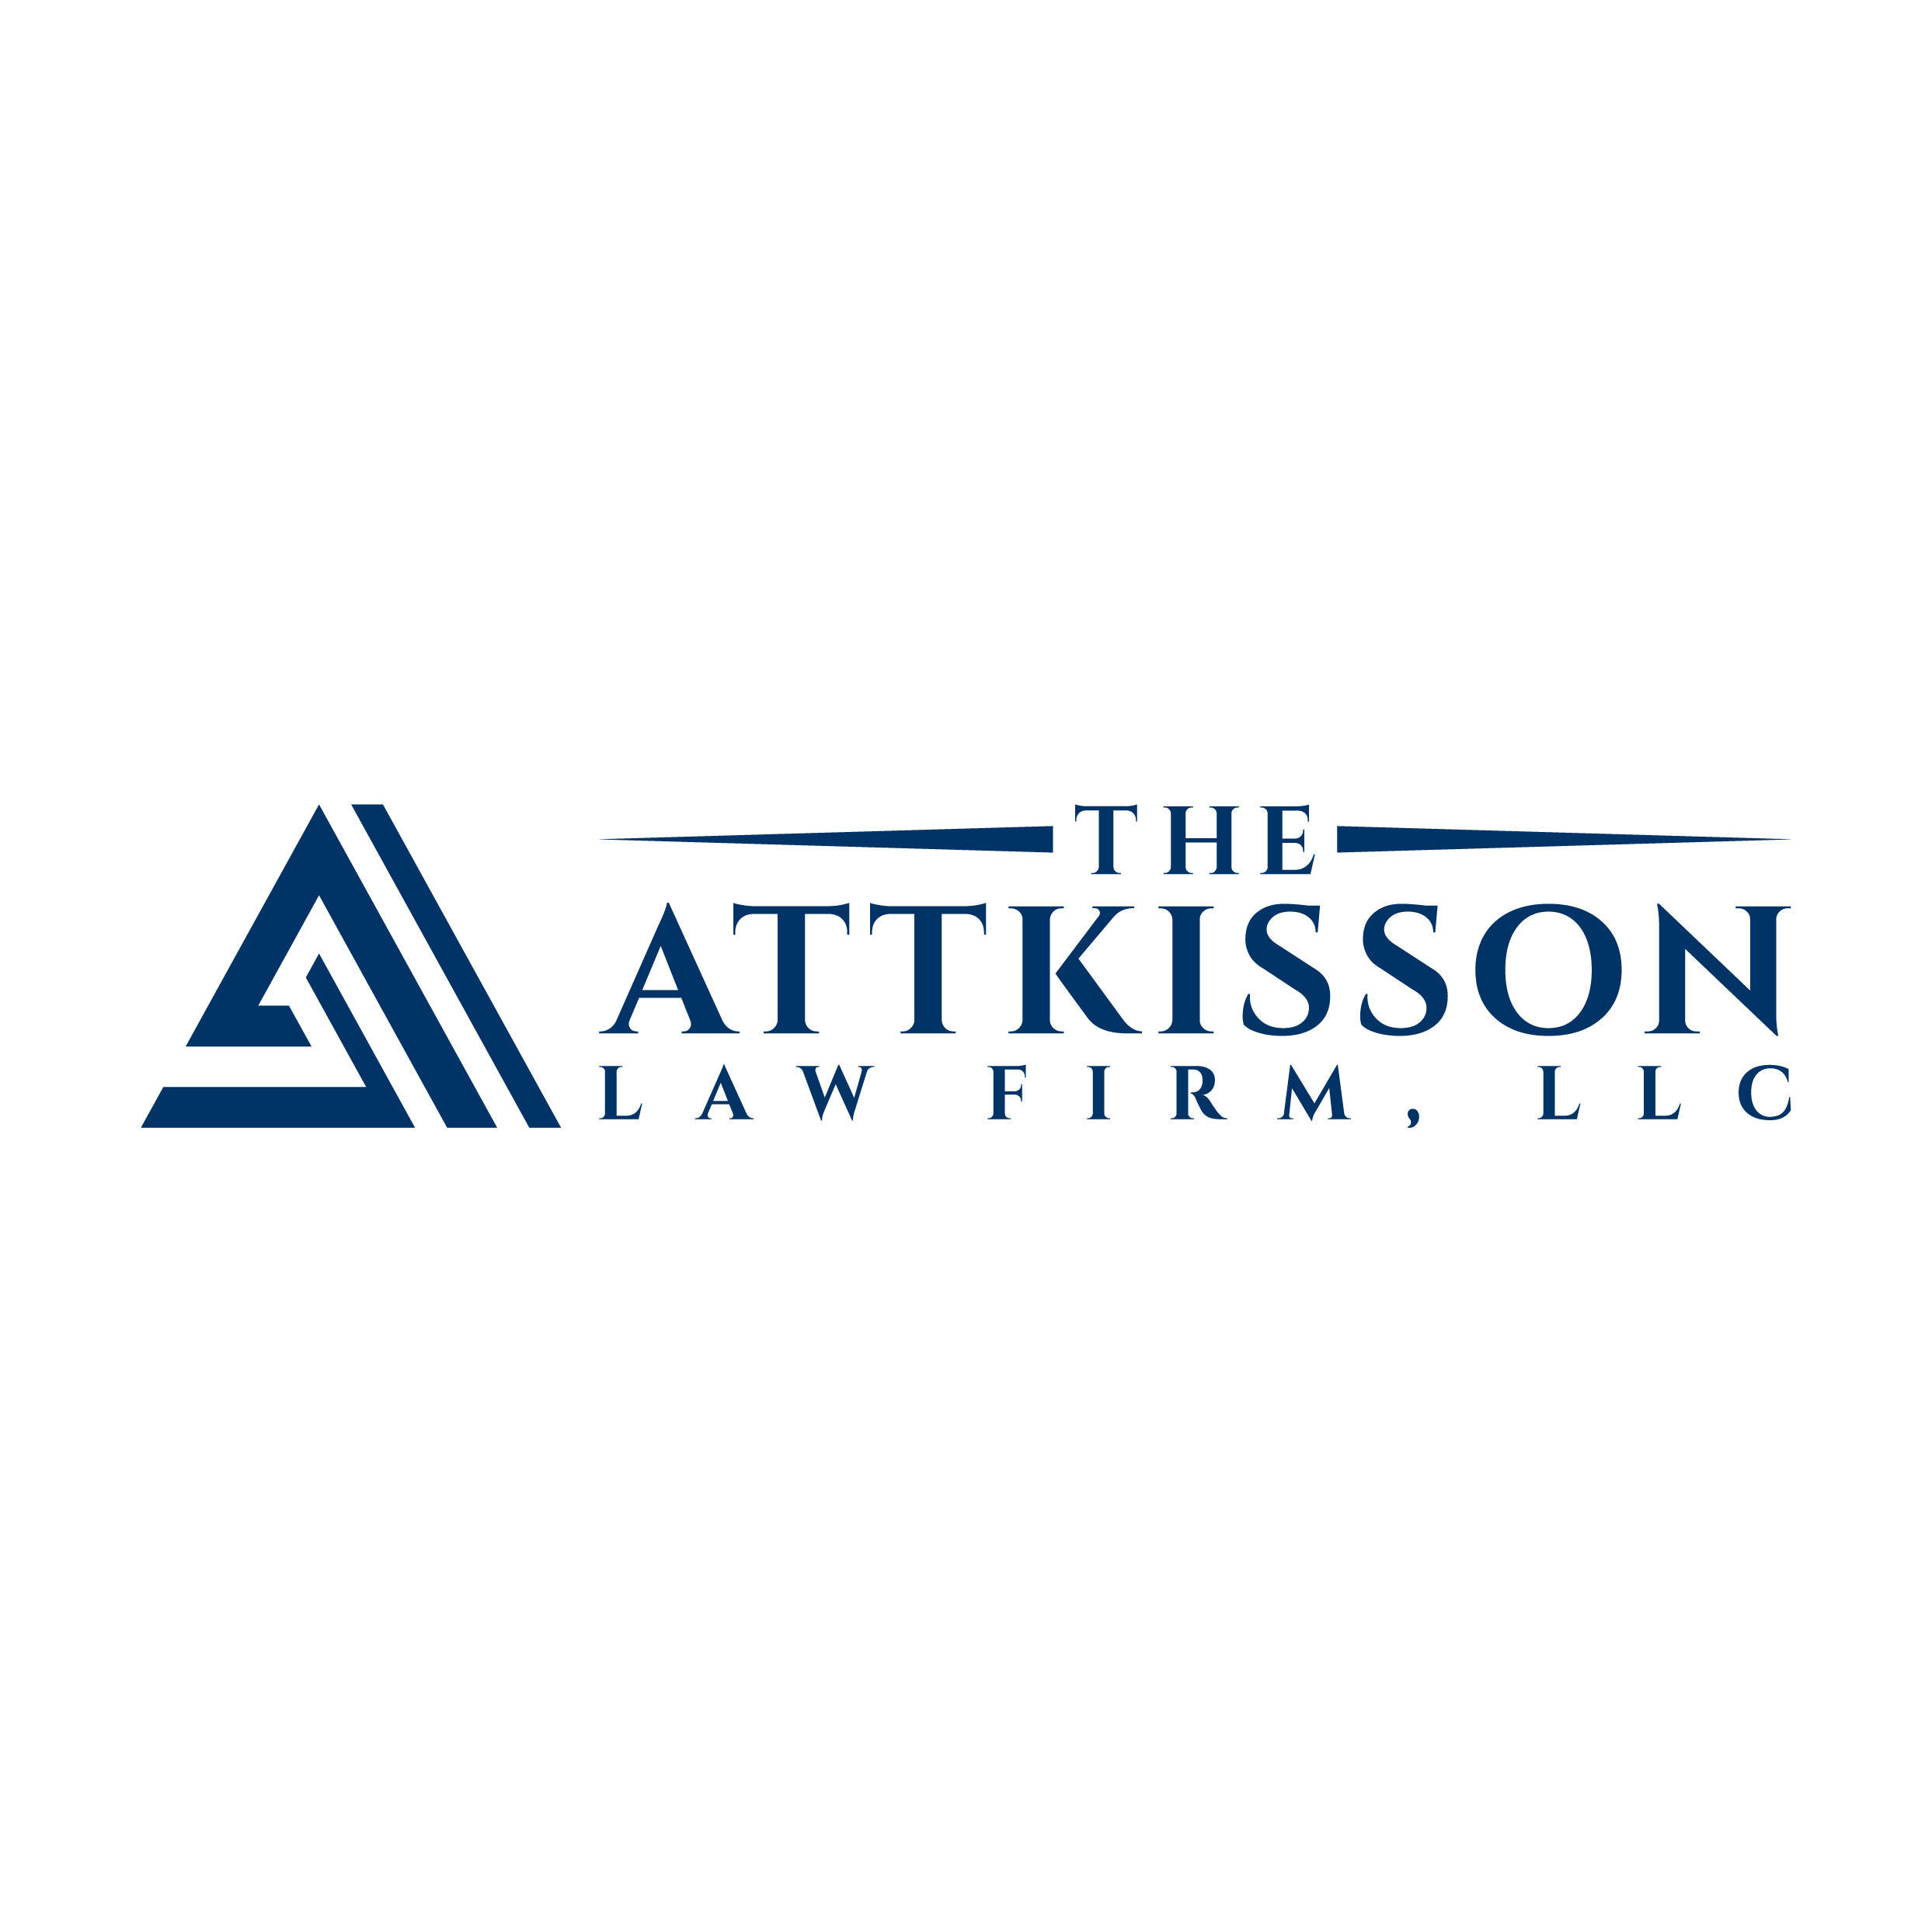 The Attkisson Law Firm, LLC - Dayton, OH 45439 - (937)276-9700 | ShowMeLocal.com